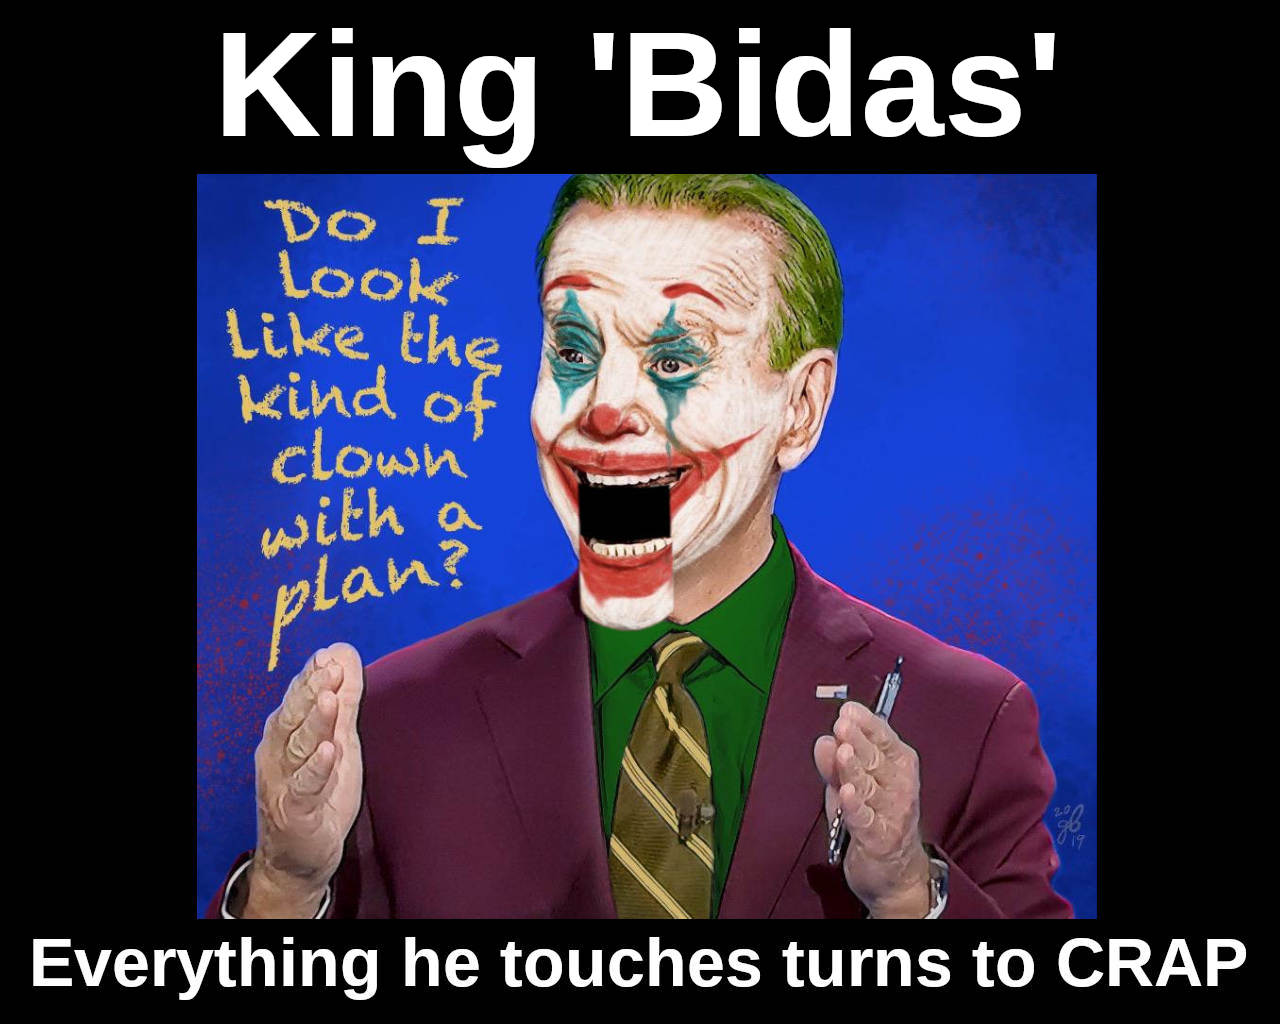 King Bidas, turning EVERYTHING he touches into CRAP